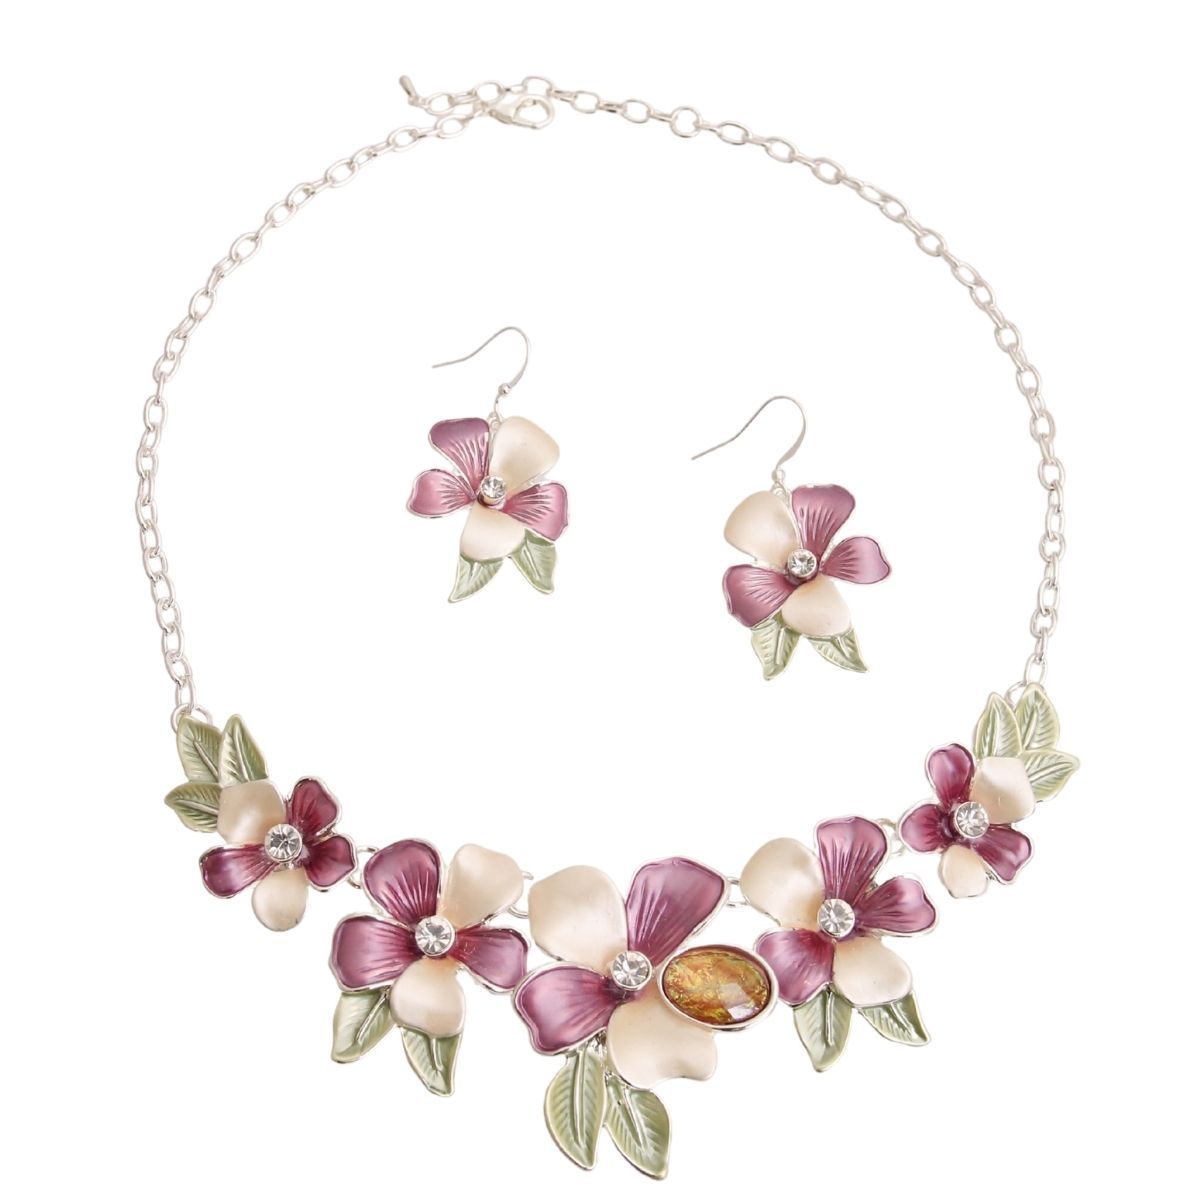 Purle Metal Flower Necklace Set